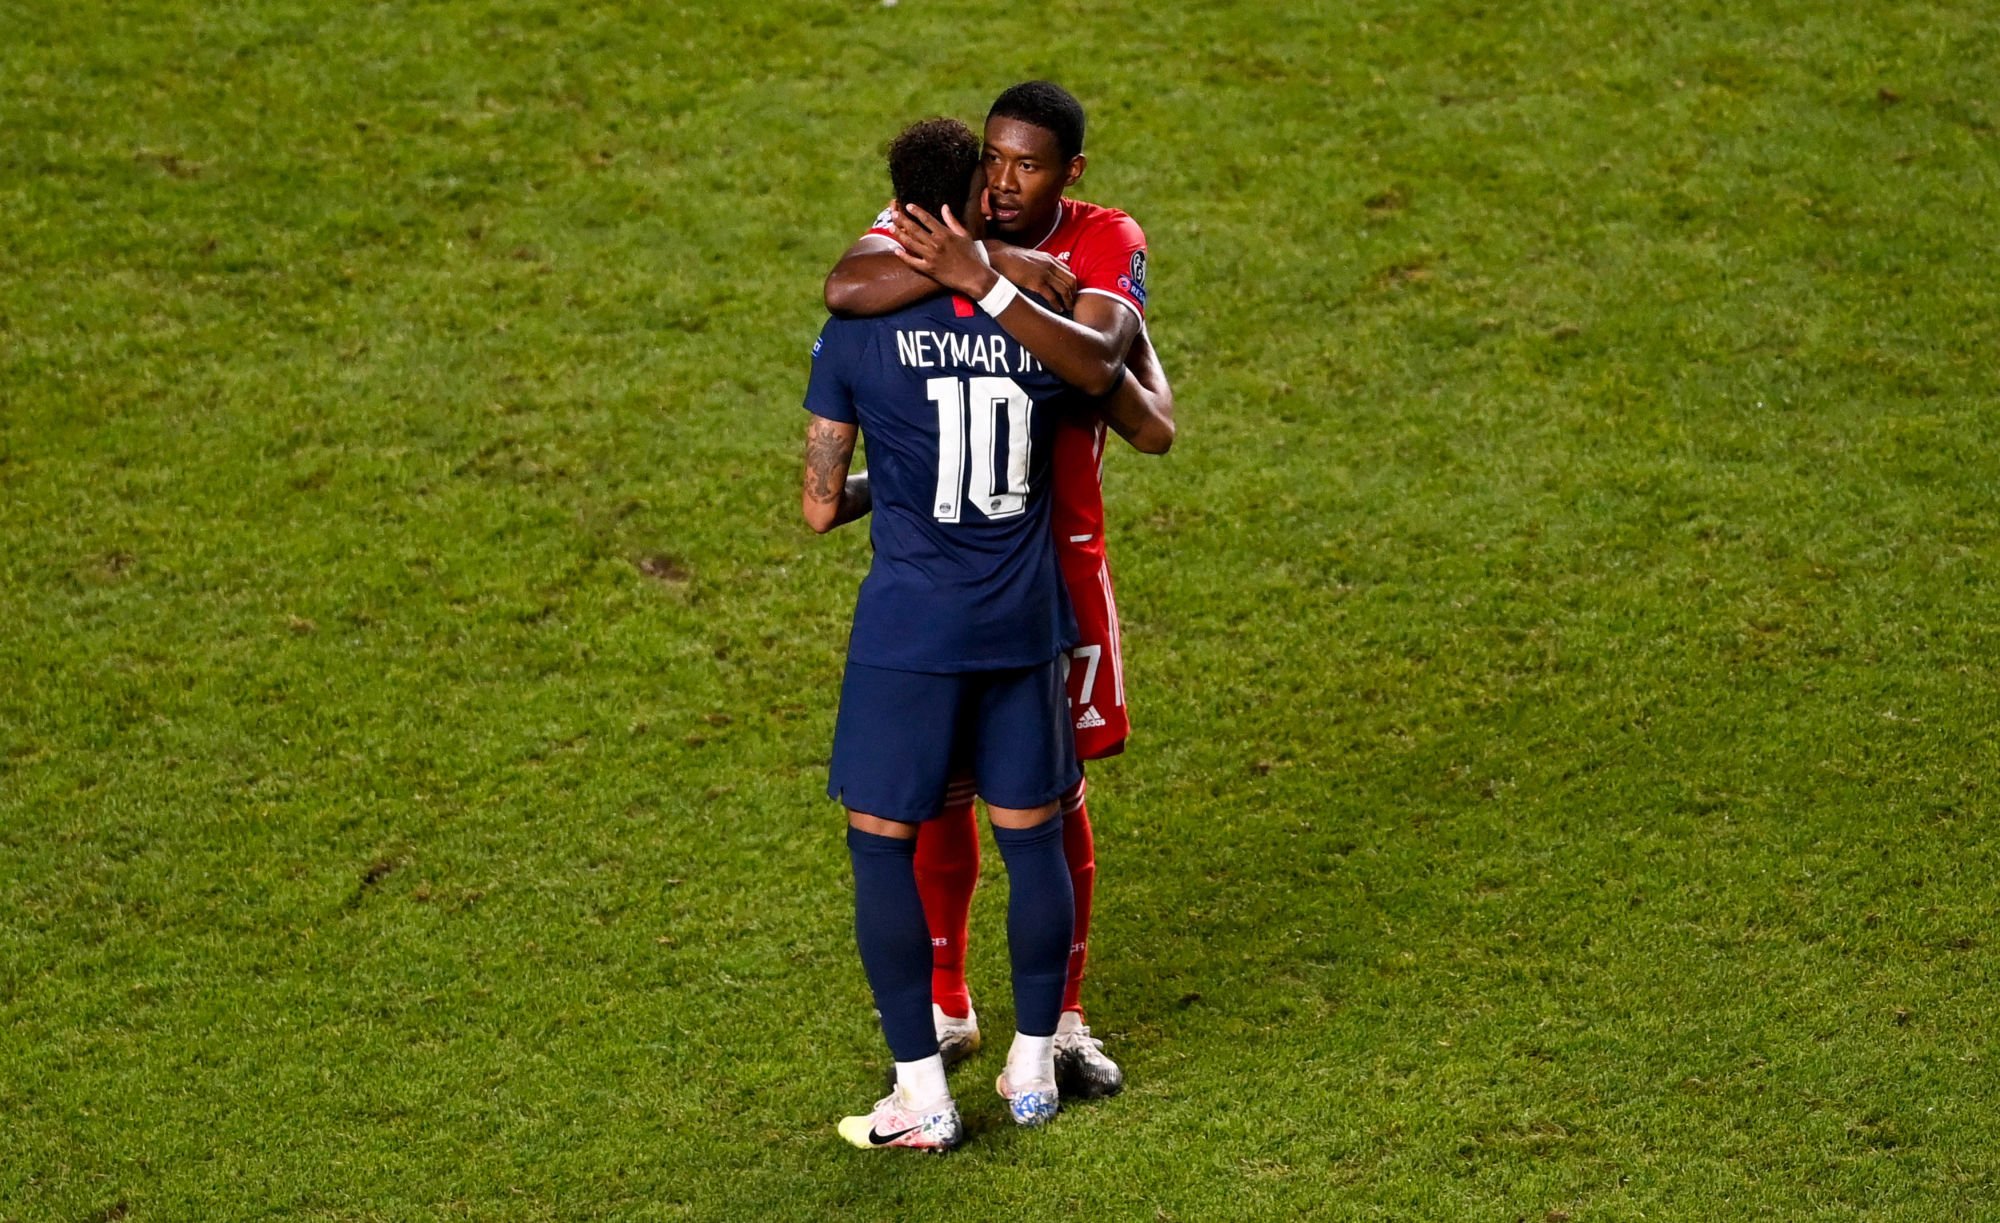 David Alaba - FC Bayern Munich et Neymar - Paris Saint-Germain
Photo by Icon Sport